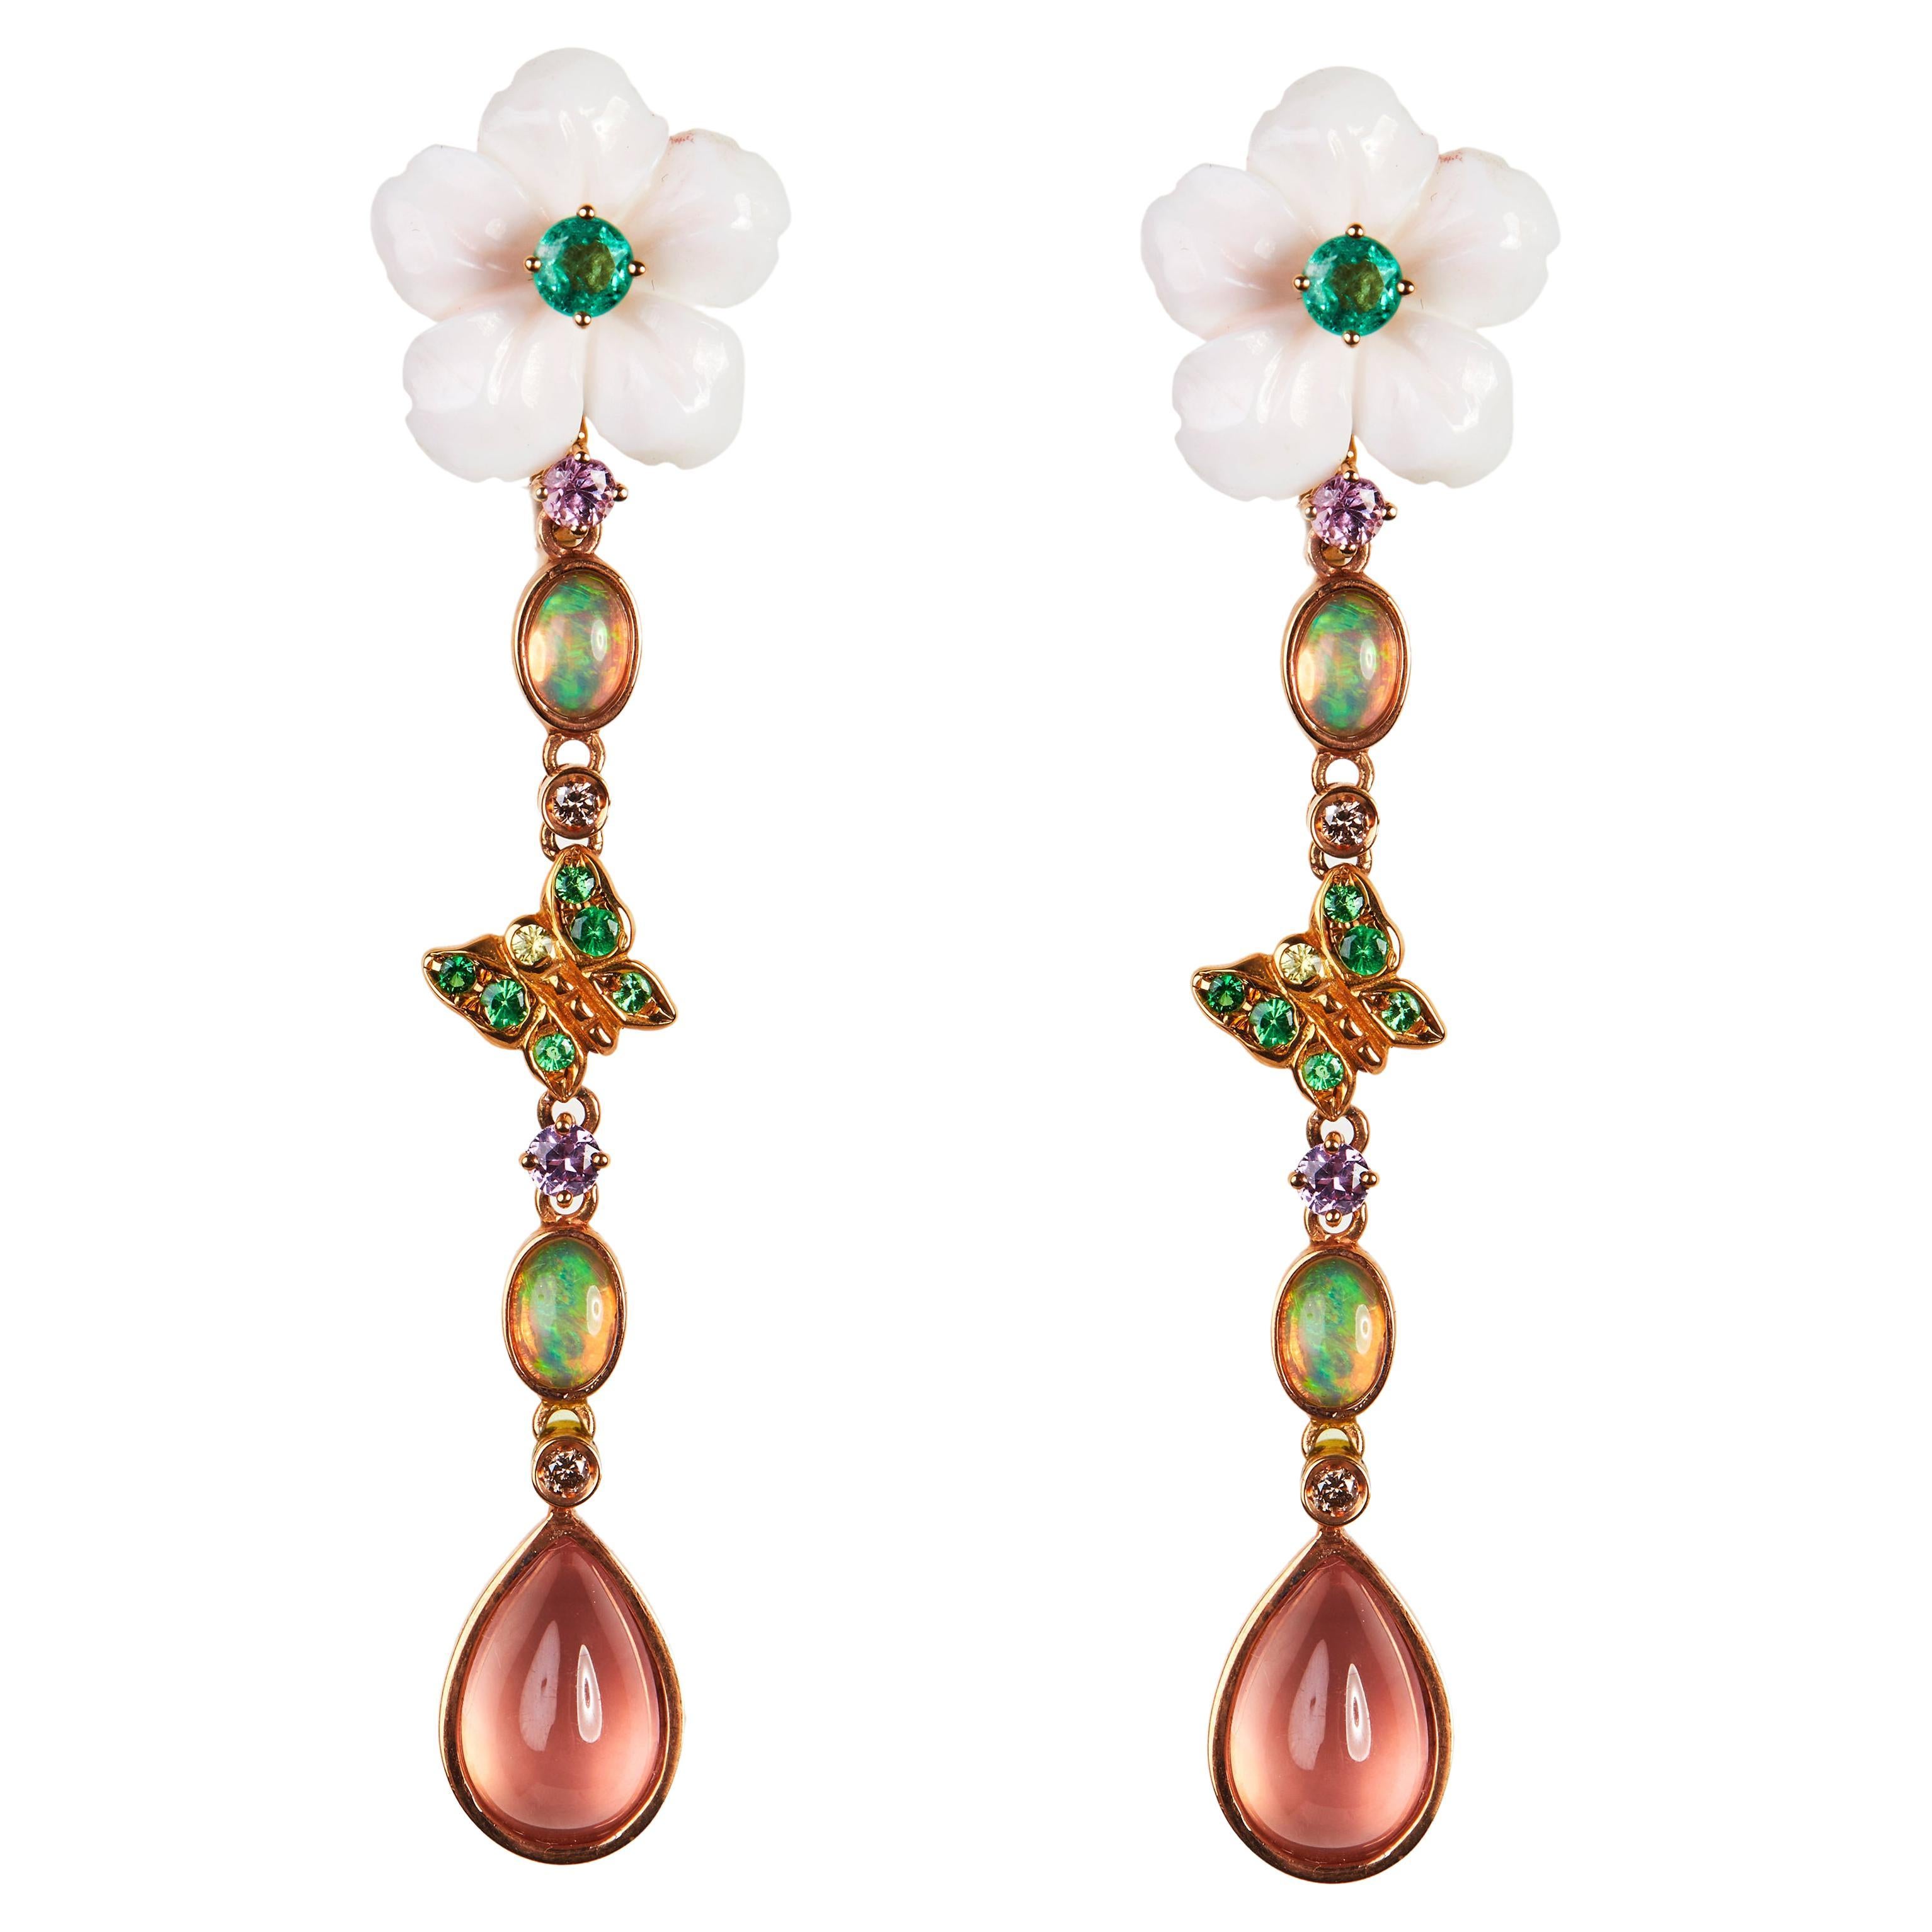 18 Karat Rose Gold Diamond Color Stones Dangle Earrings